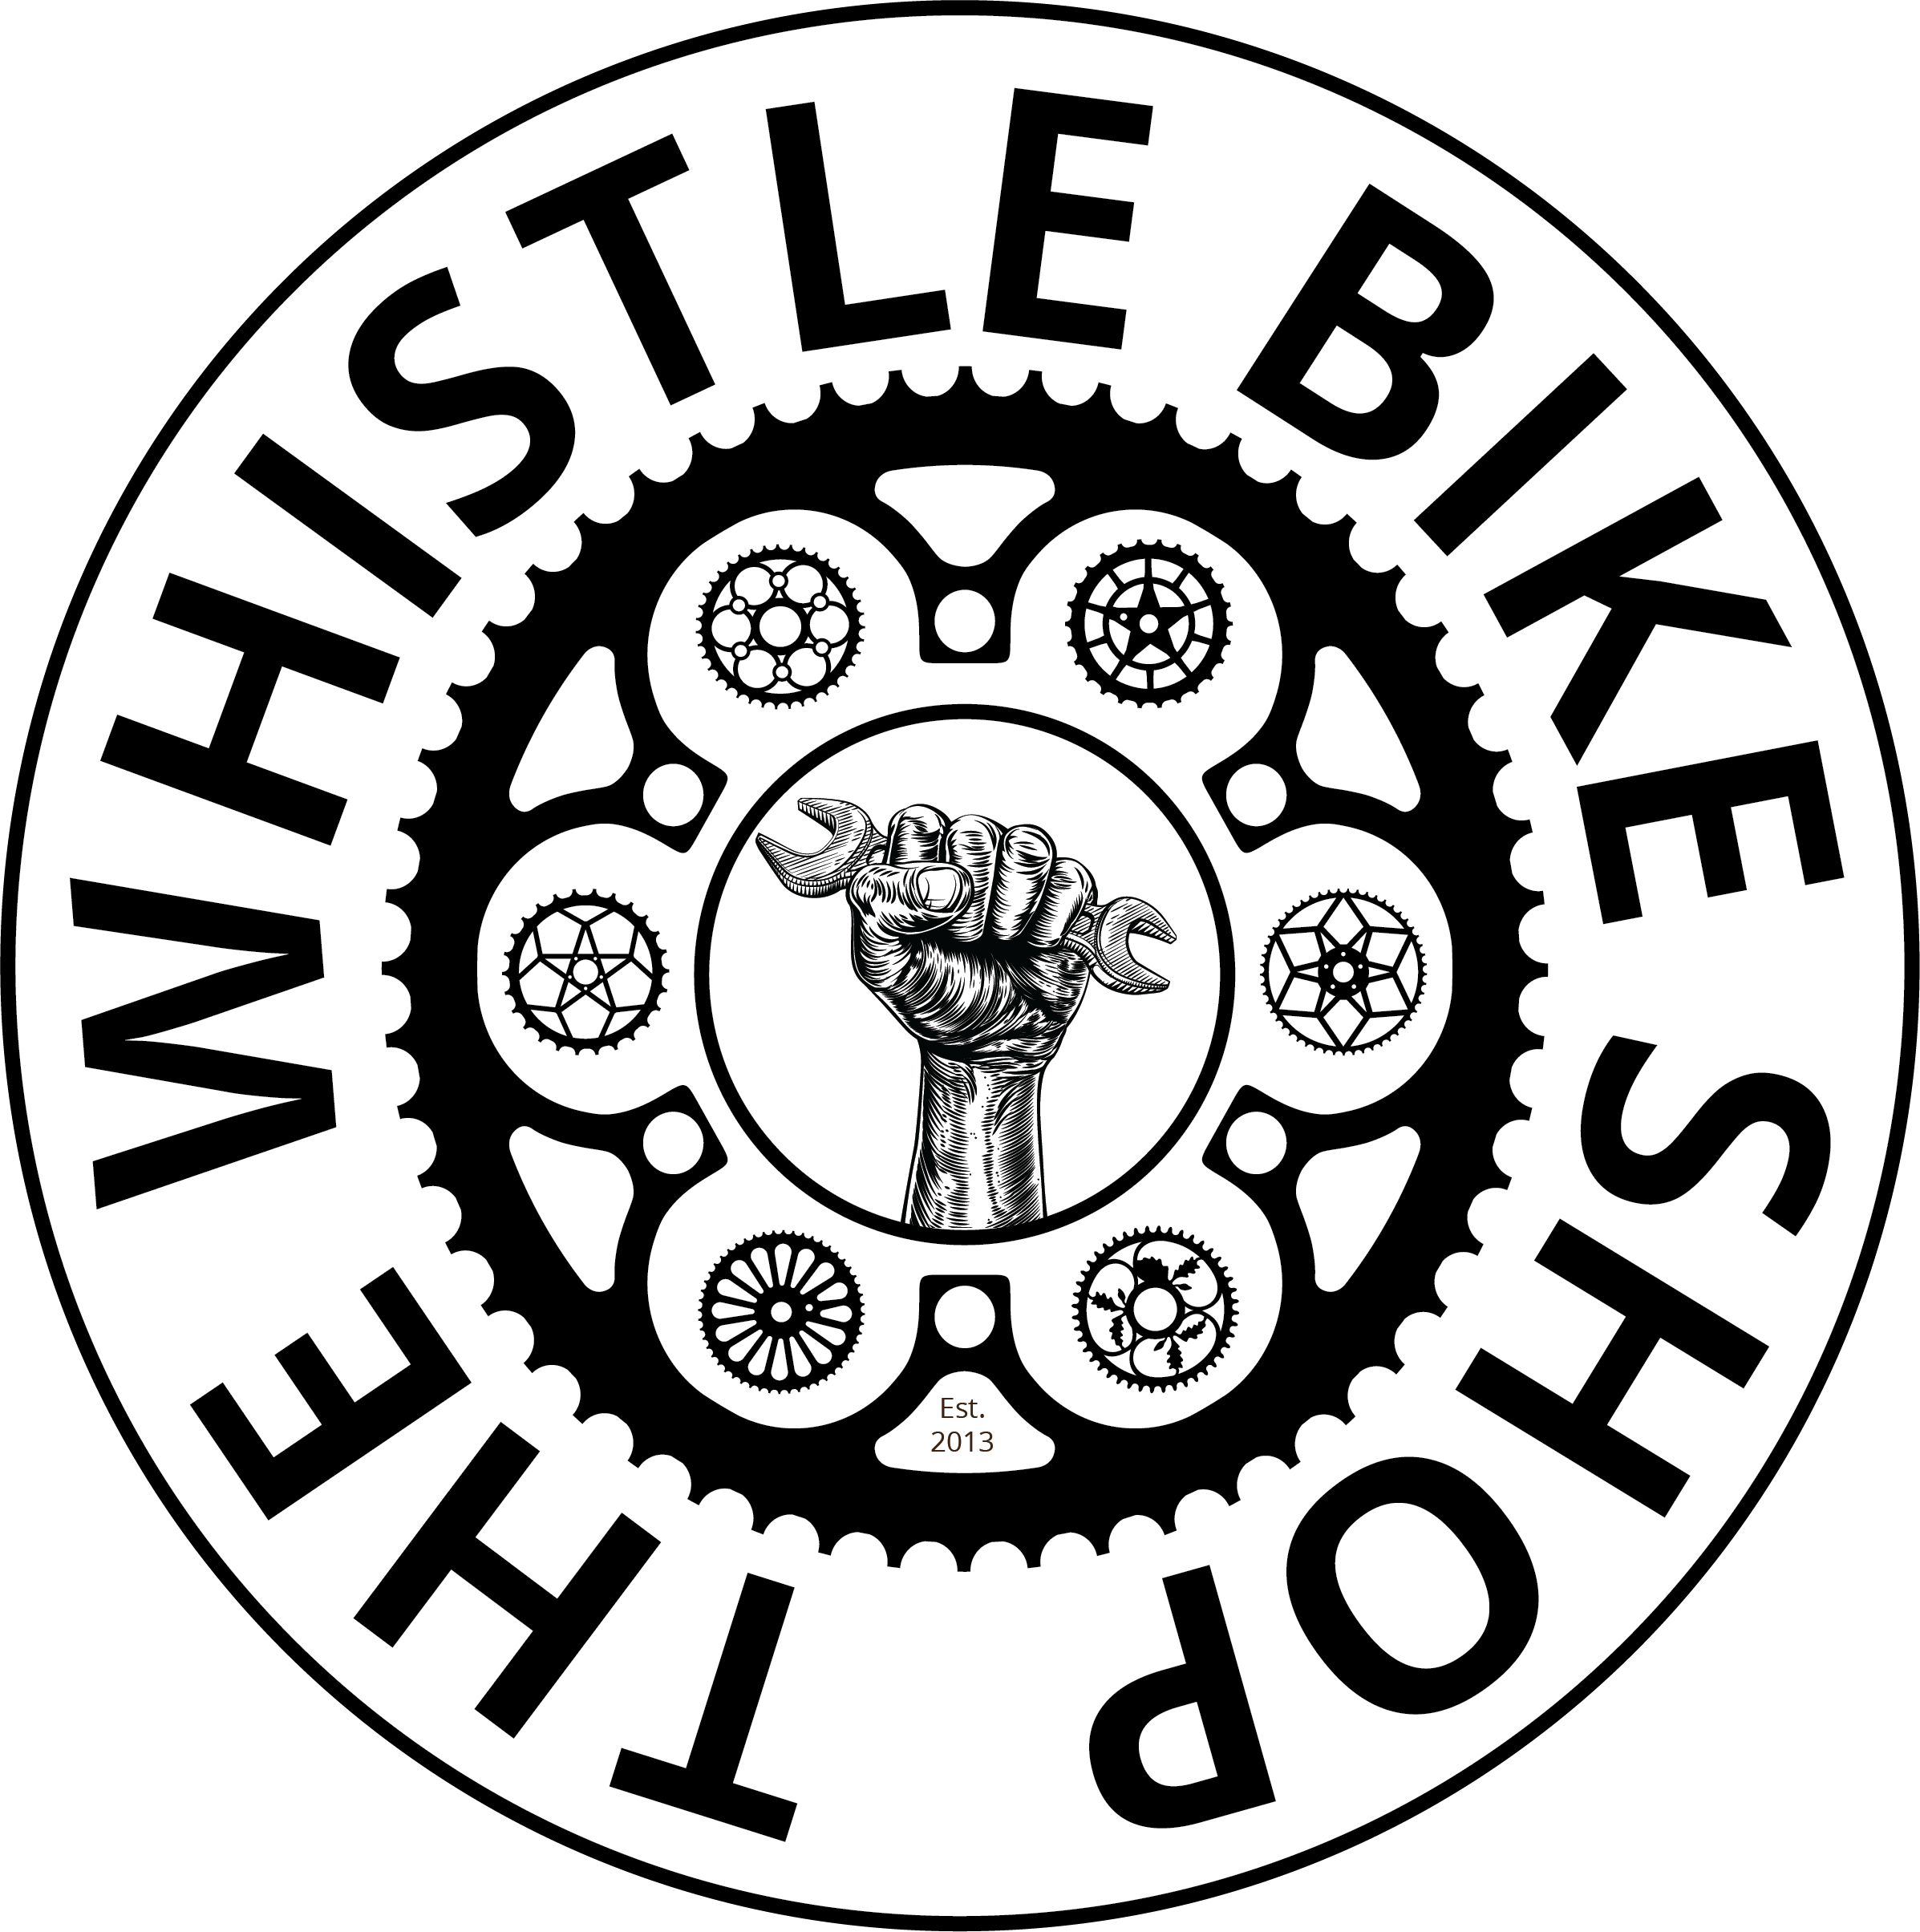 The Whistle Bike Shop